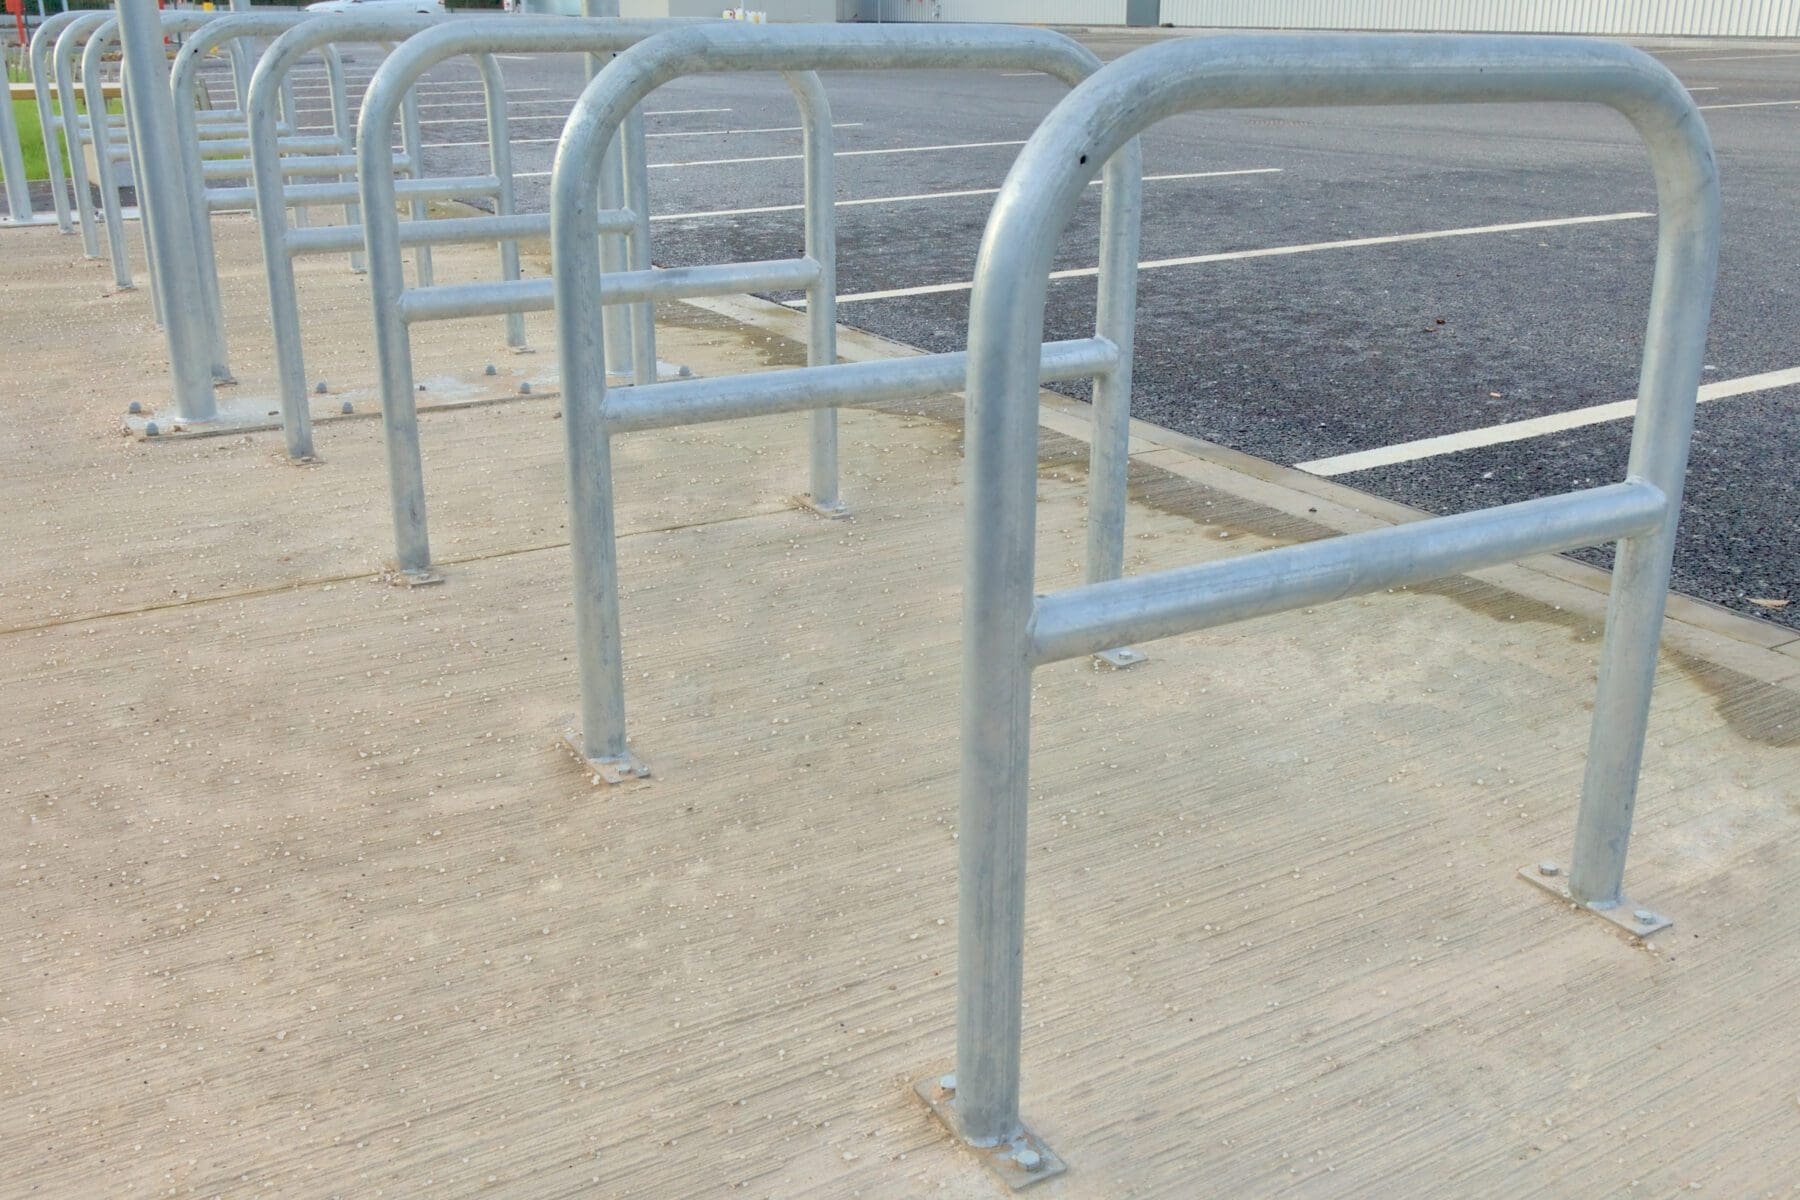 close up of bike shelter bars